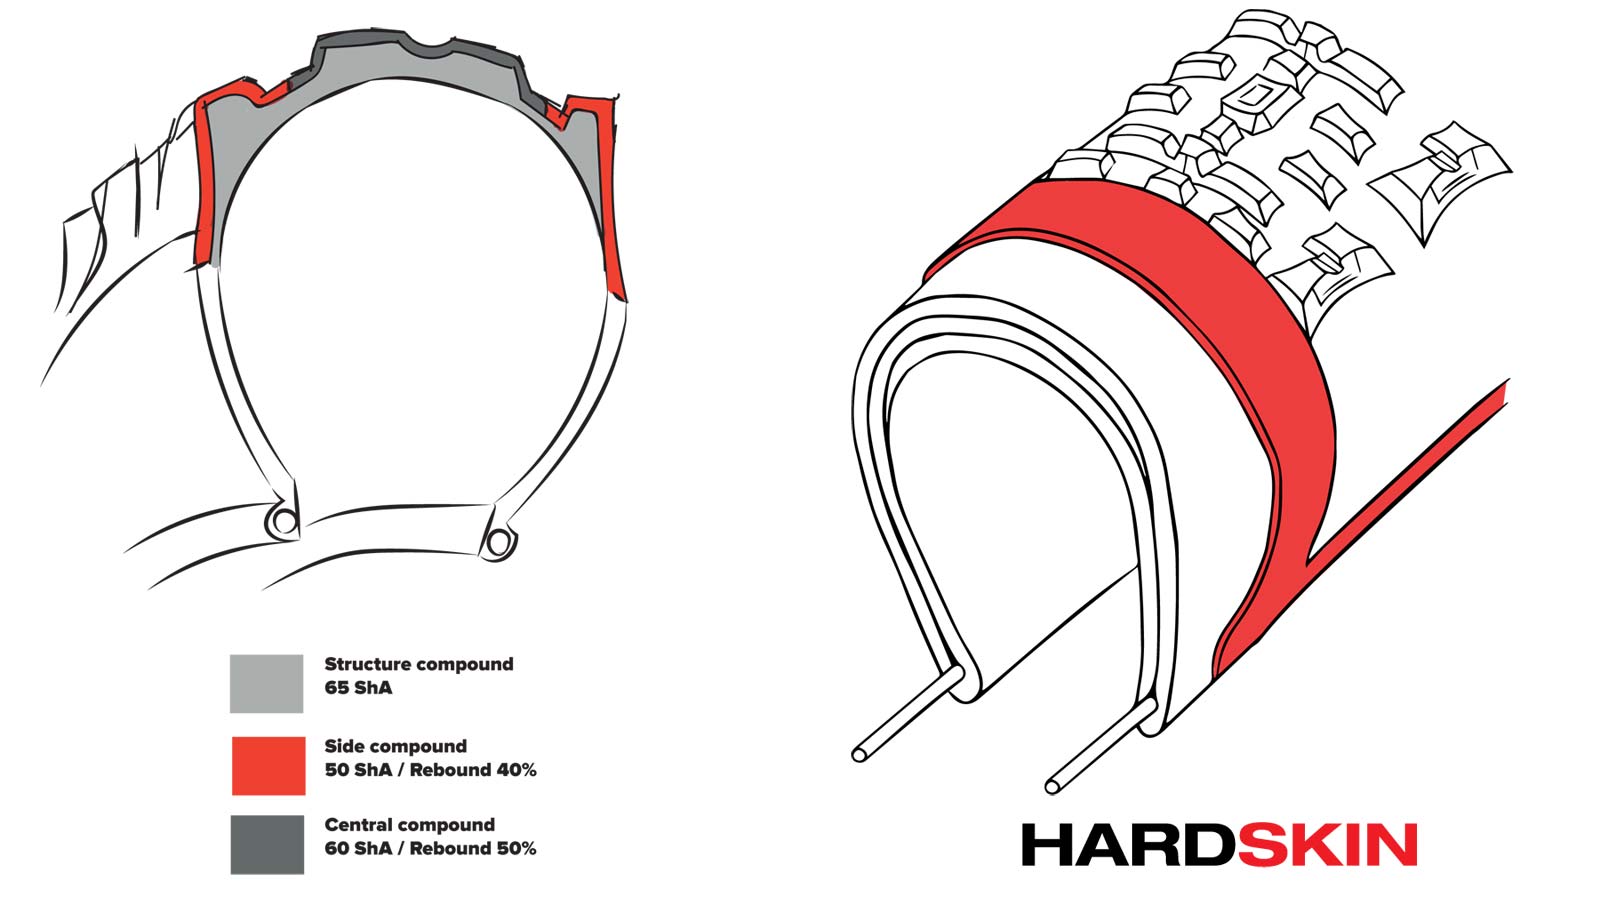 Hutchinson Kraken Racing Lab MTB tire, versatile XC cross-country trail mountain bike tires